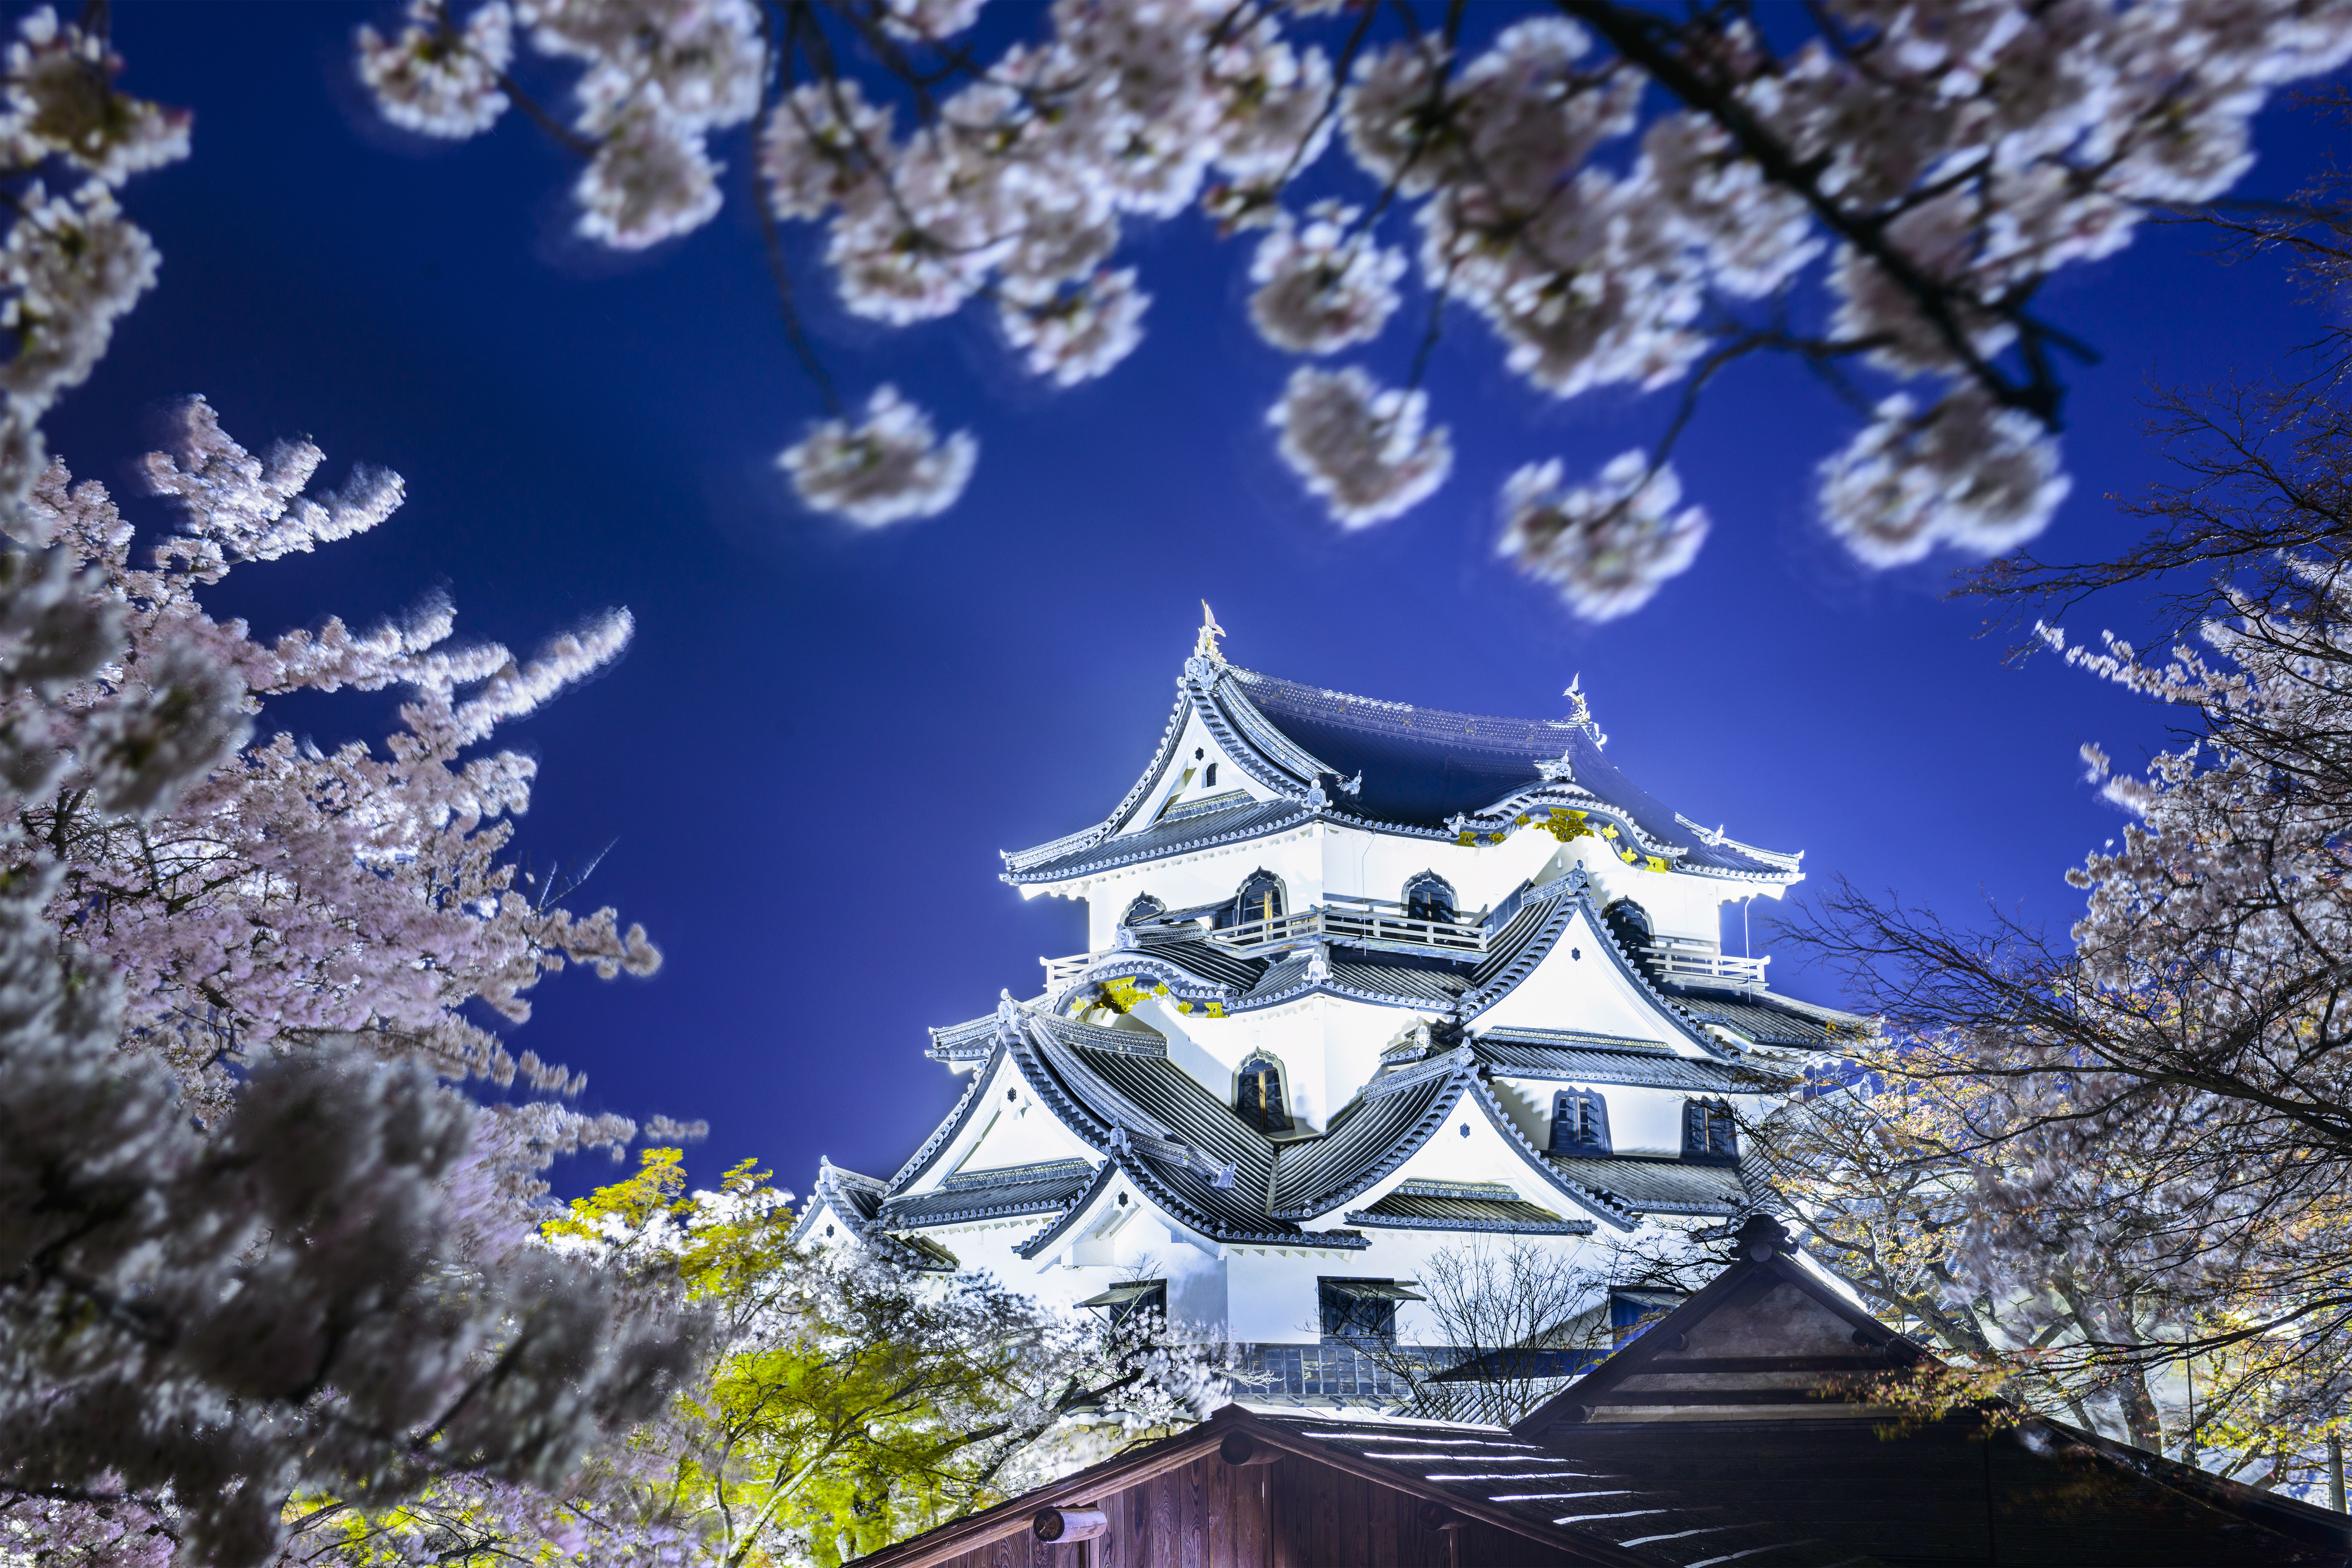  Wallpaper Hikone Japan Hikone Castle Hikone Japan spring cherry 6000x4000